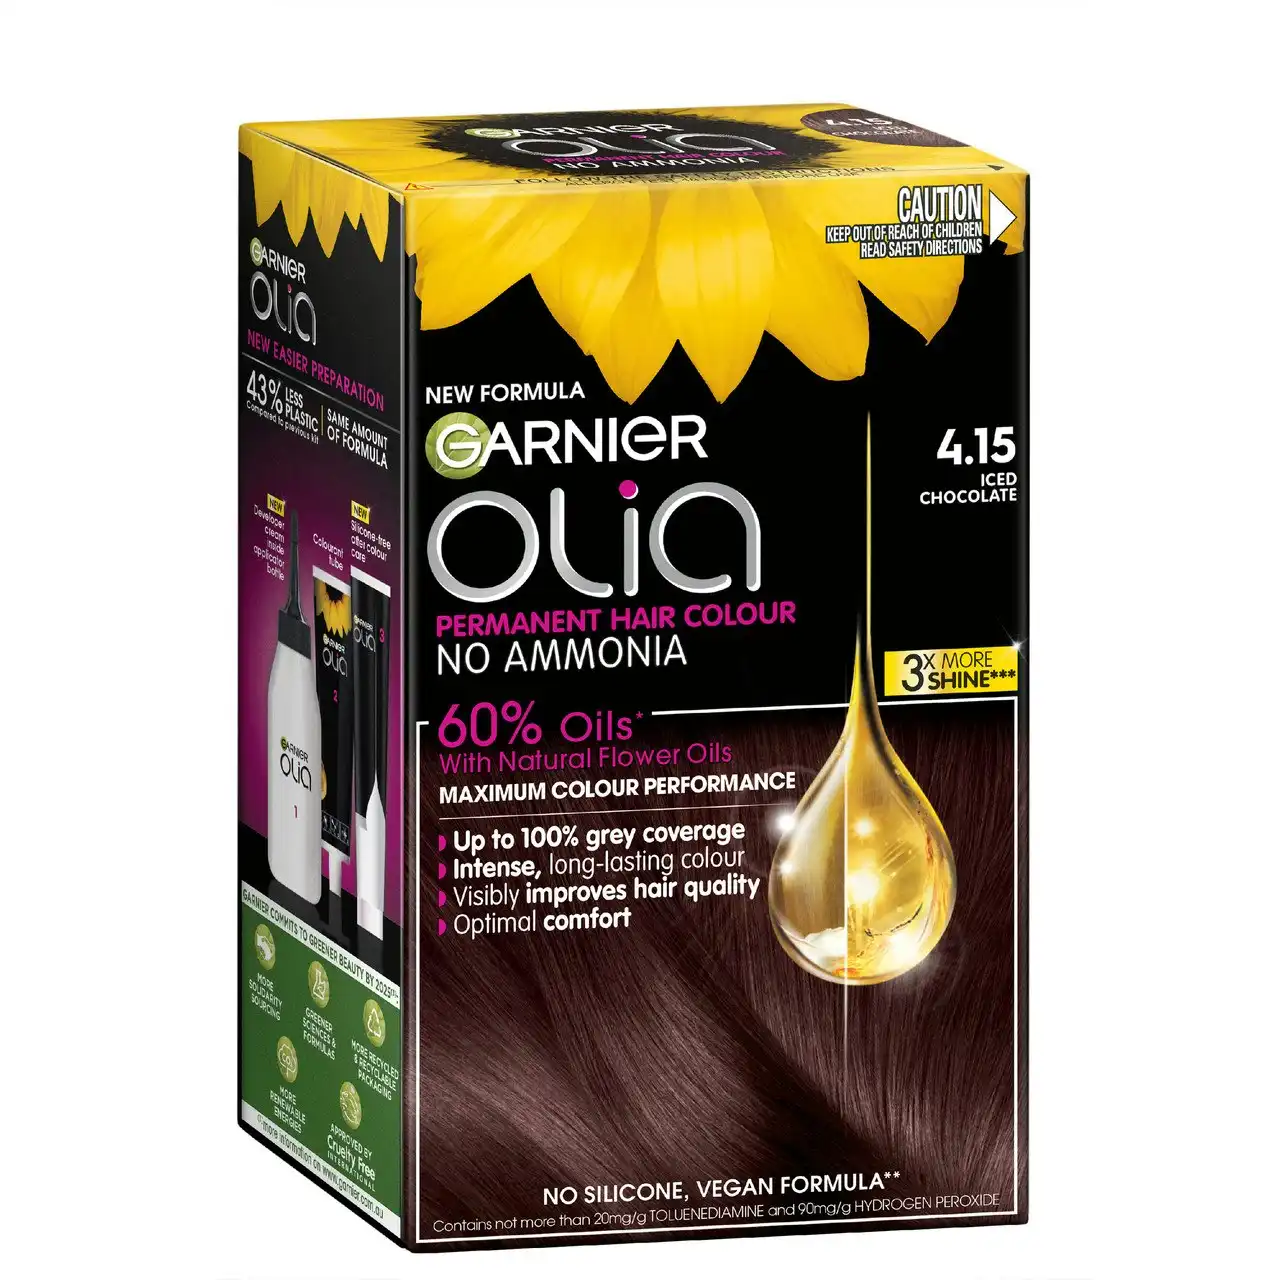 Garnier Olia 4.15 Iced Chocolate Permanent Hair Colour No Ammonia, 60% Oils